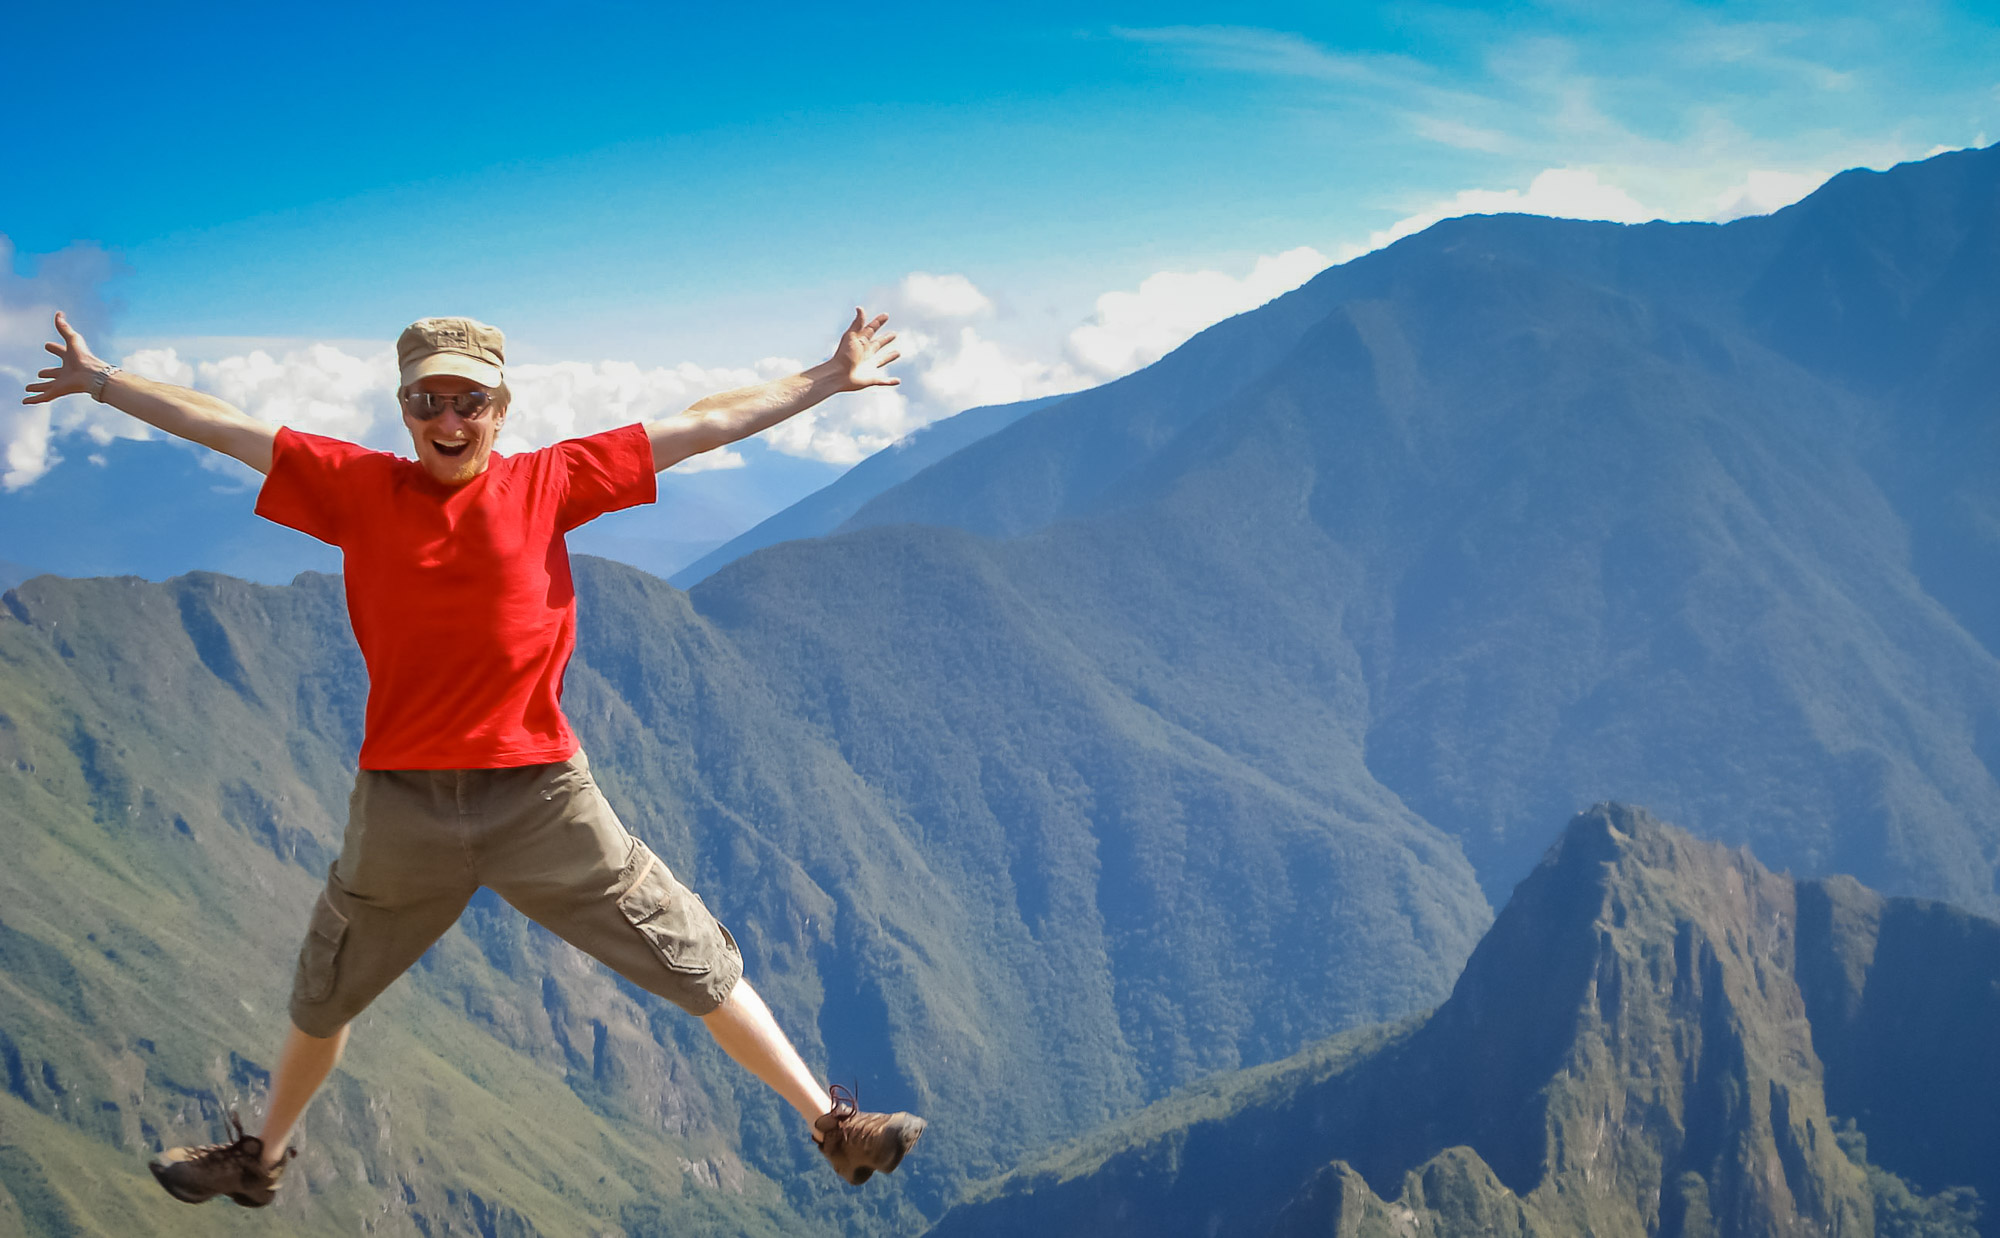 Peru adventure tour guest jumping for joy on Machu Picchu mountain